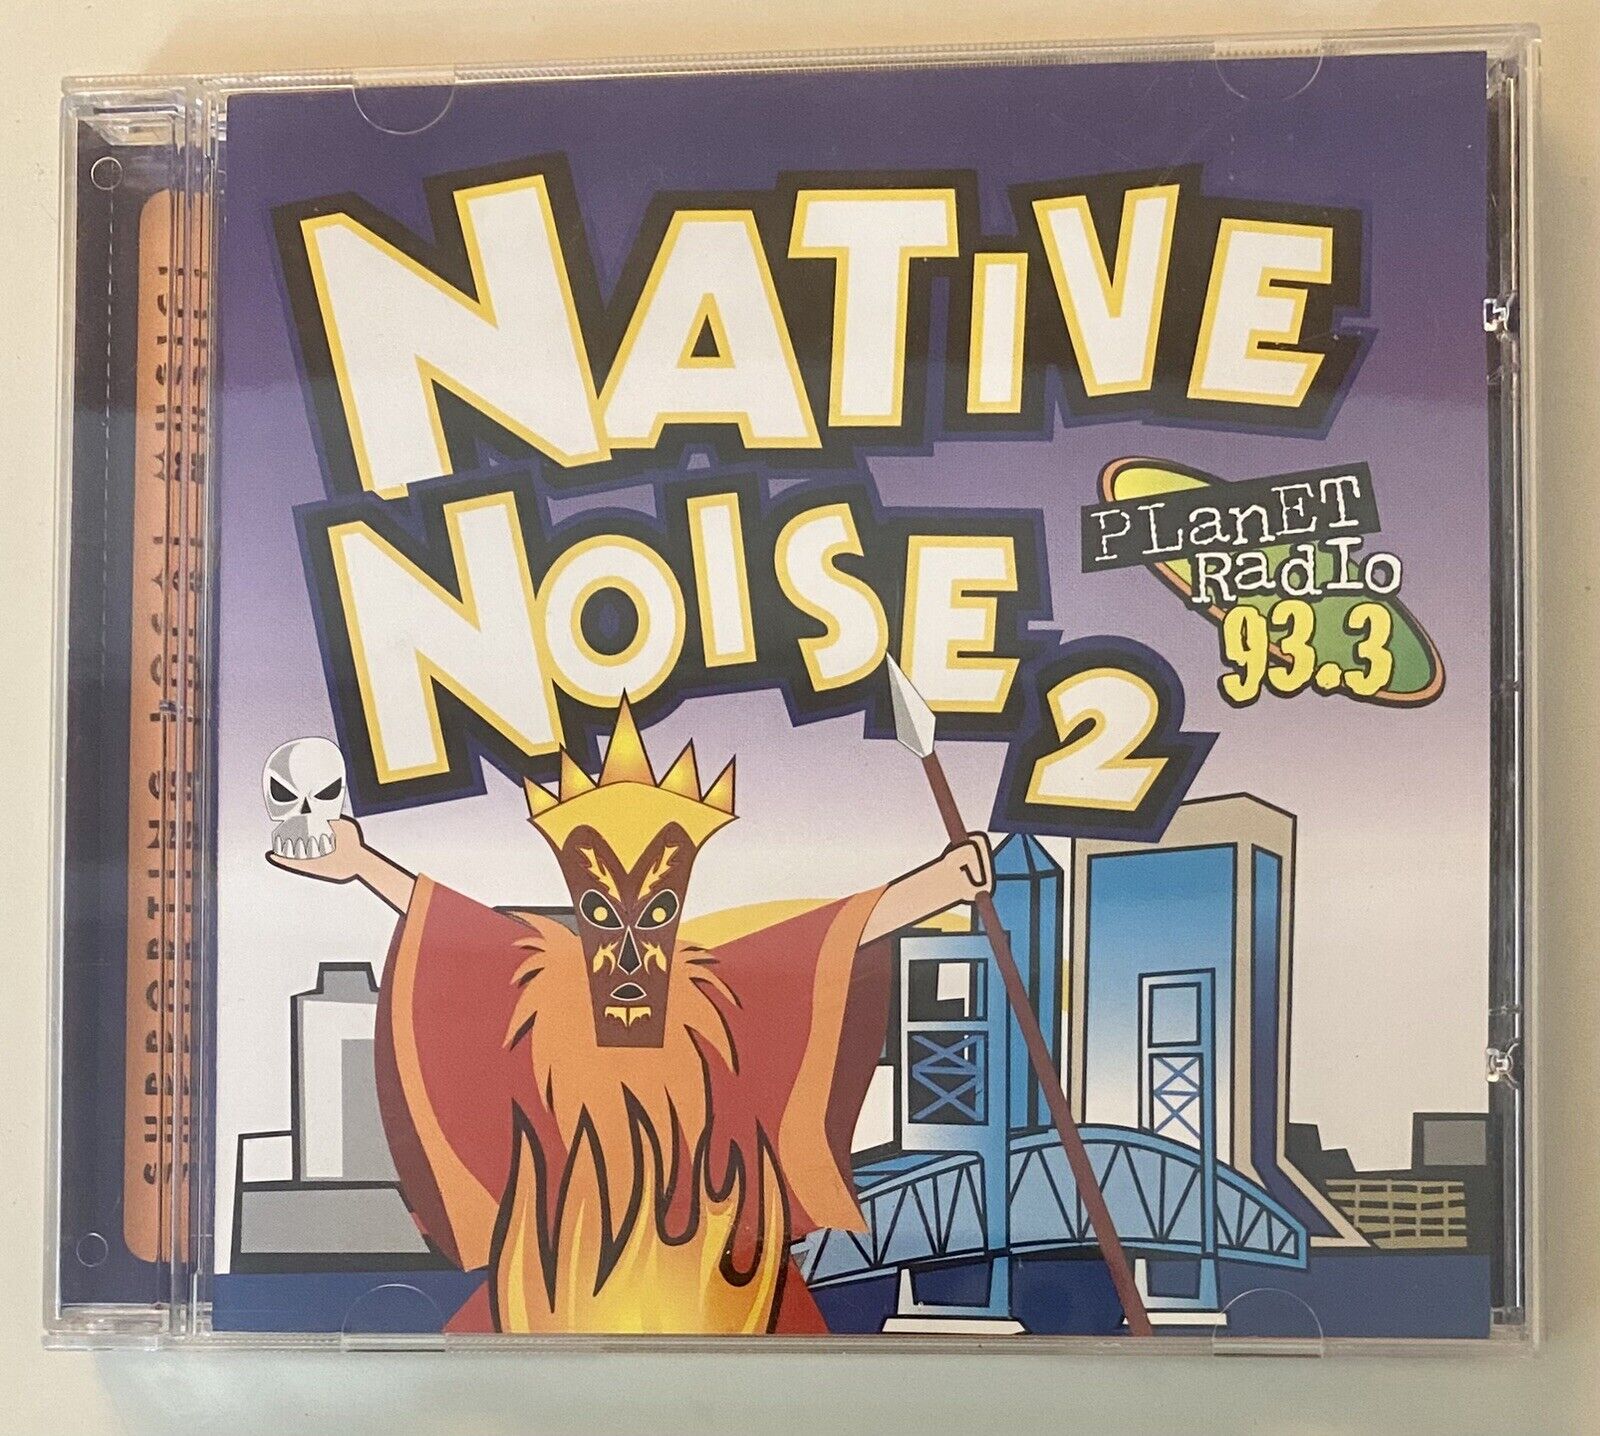 Native Noise 2 CD 93.3 Planet Radio Local Jacksonville Music